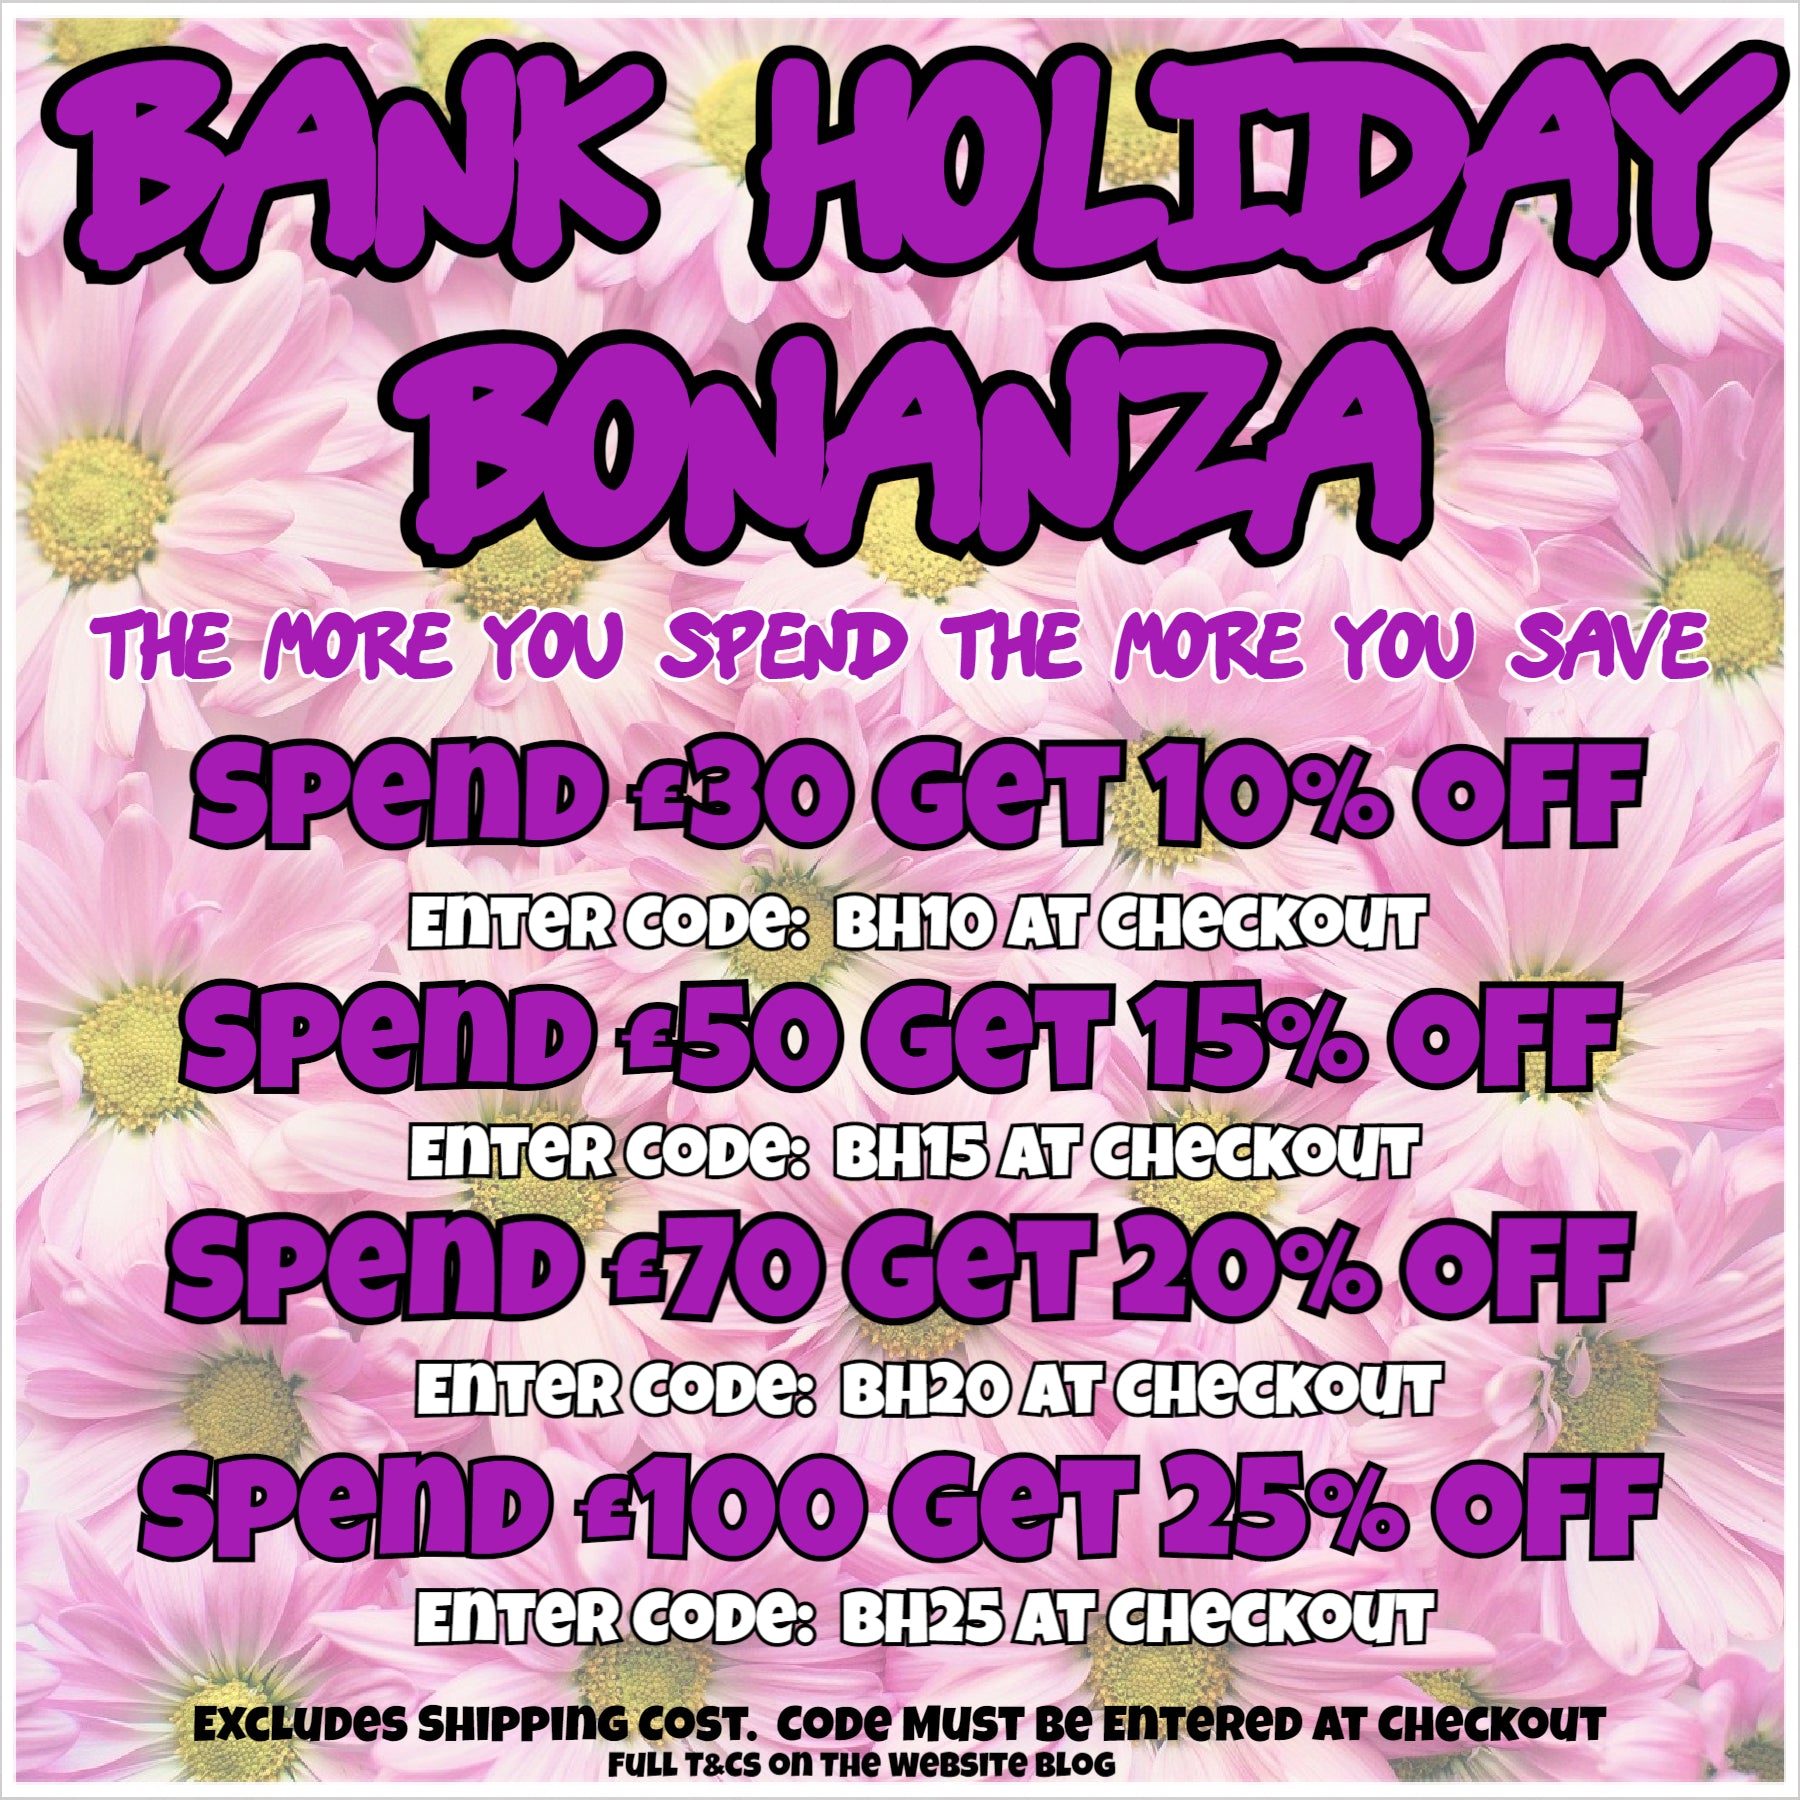 Bank Holiday Bonanza Terms & Conditions